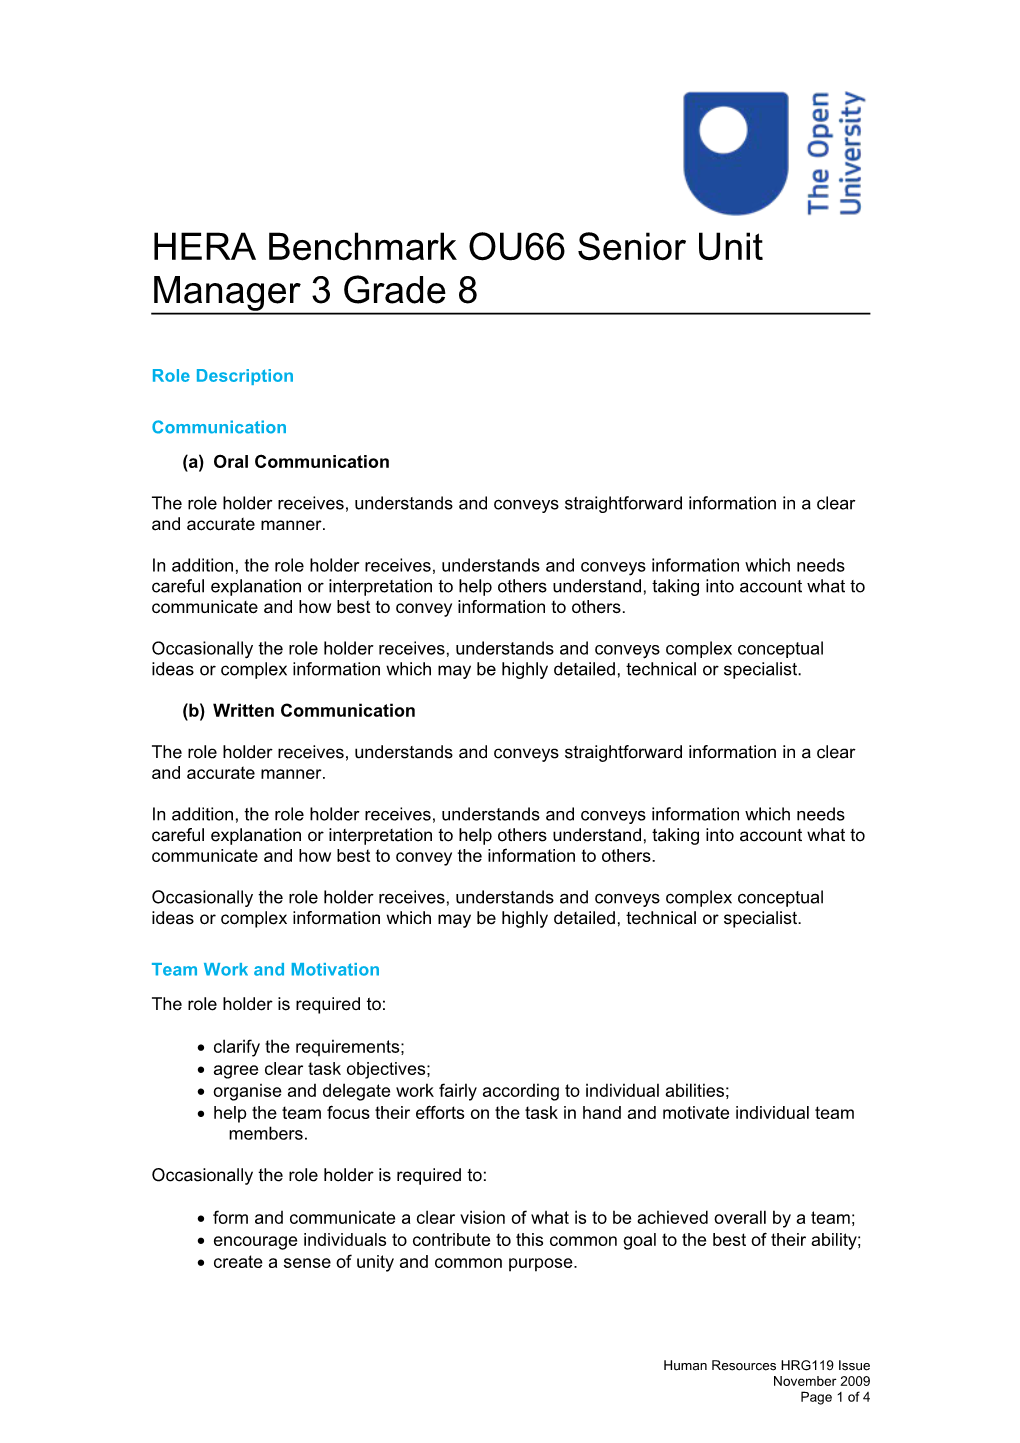 HERA Benchmark OU66 Senior Student Services Manager Grade 8 HRG119